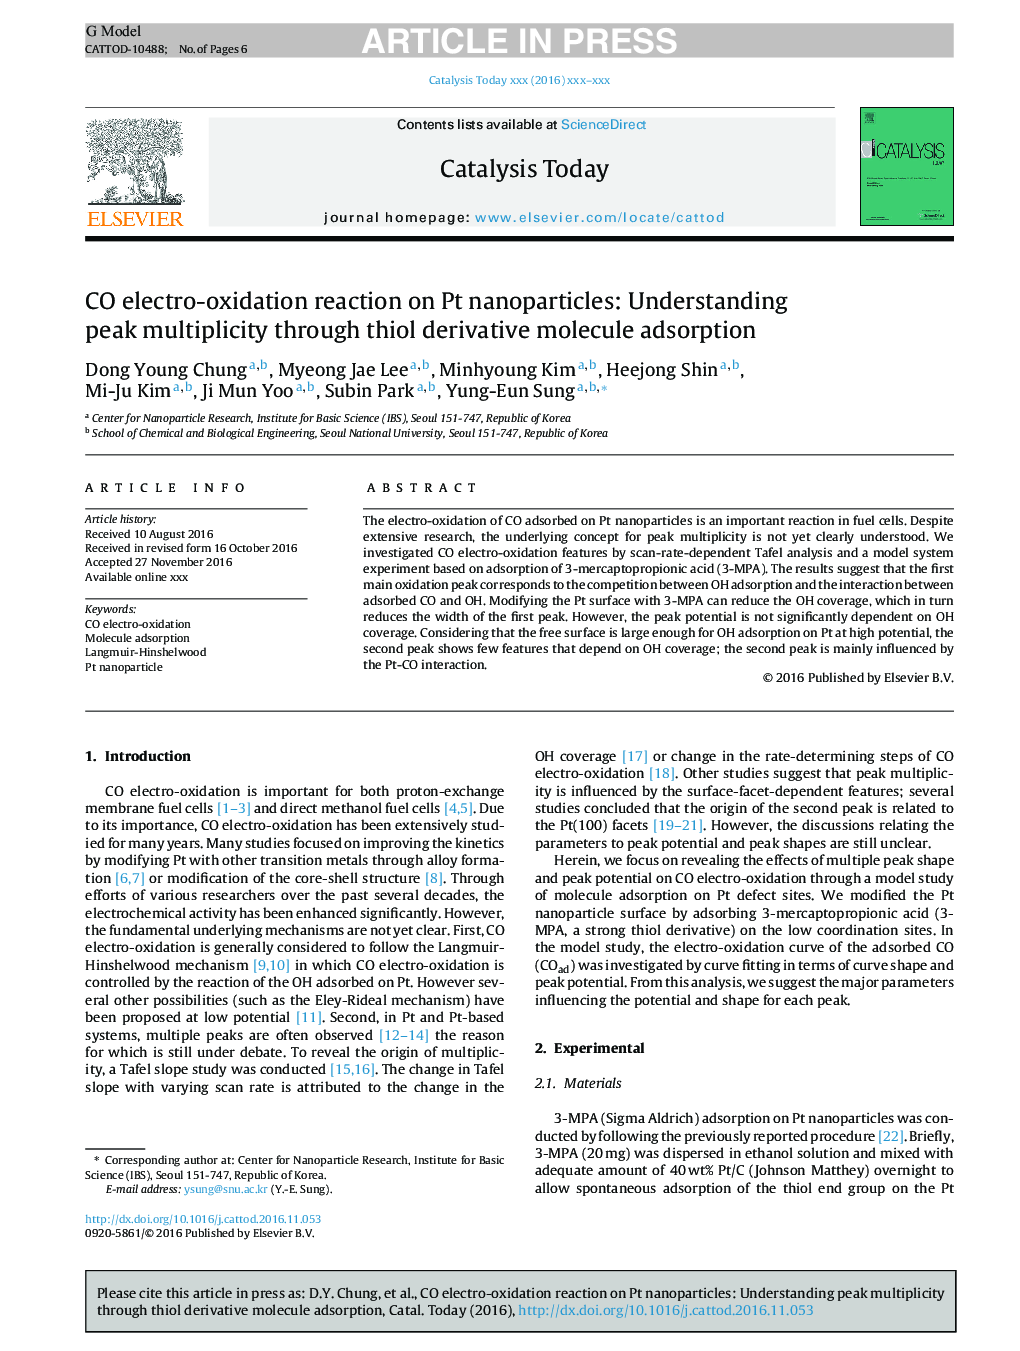 CO electro-oxidation reaction on Pt nanoparticles: Understanding peak multiplicity through thiol derivative molecule adsorption